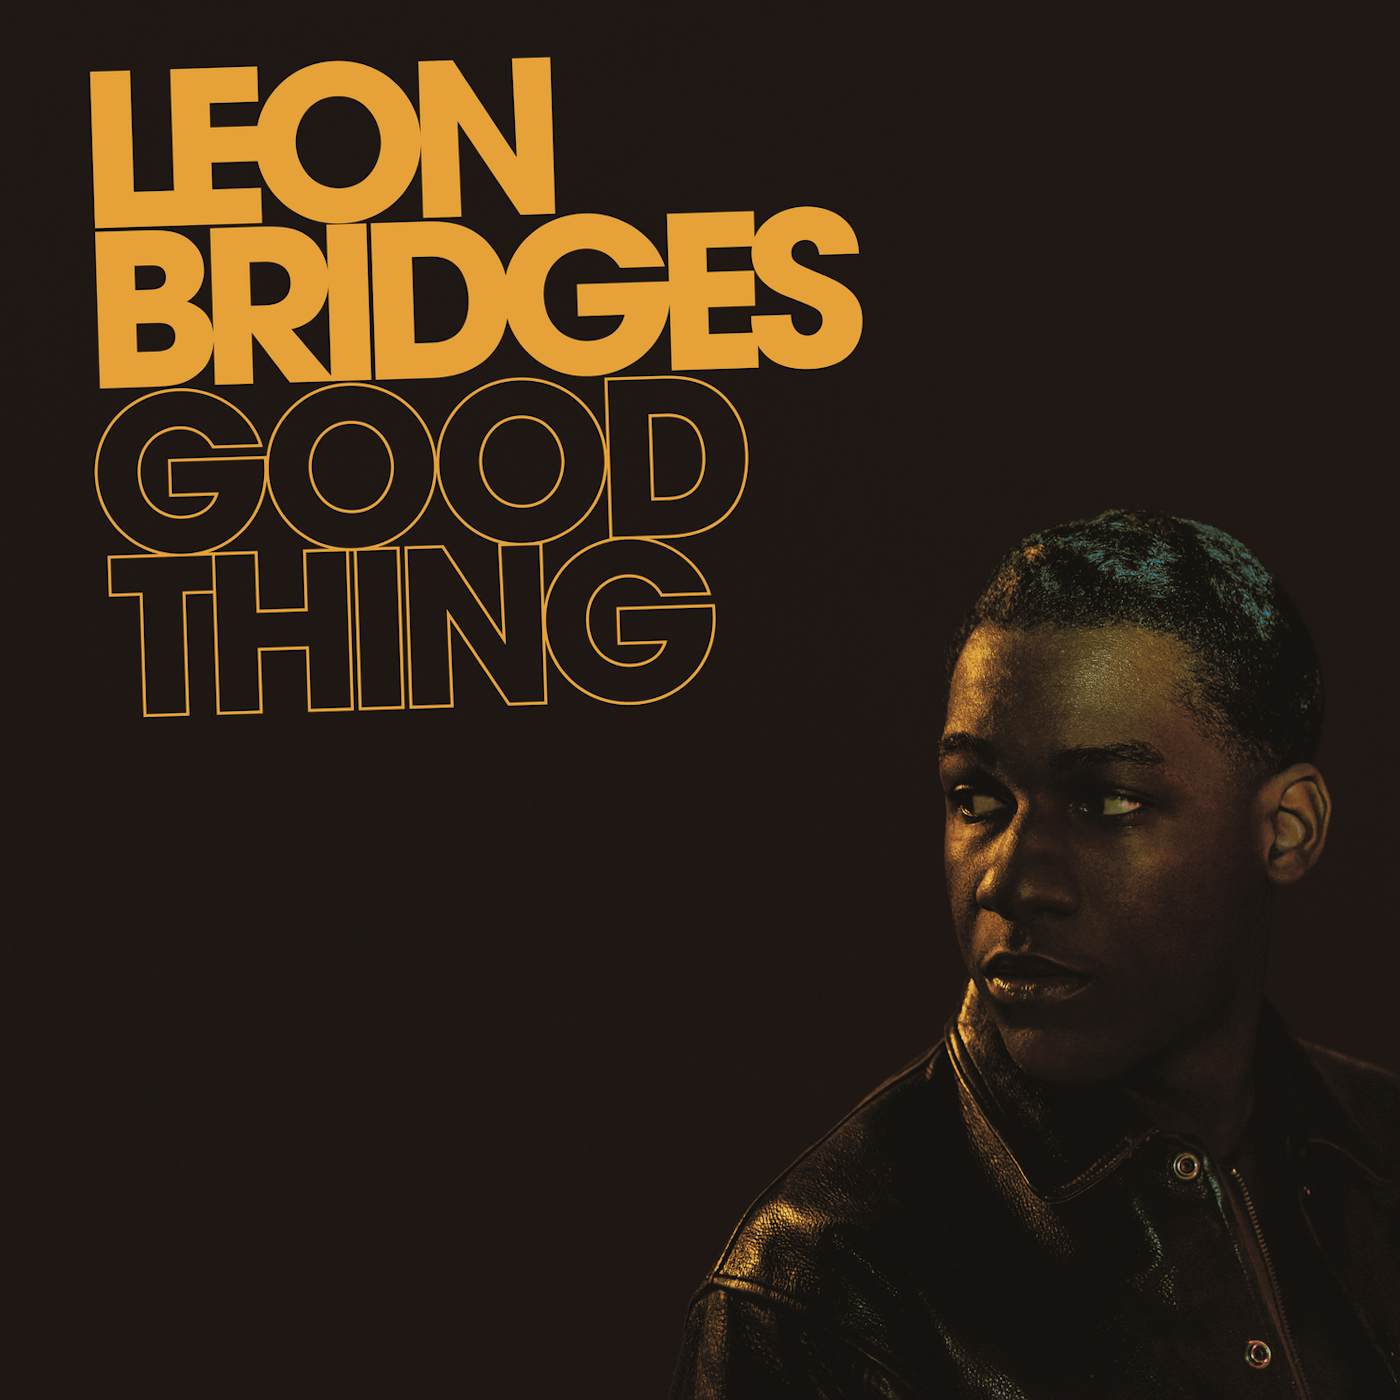 Leon Bridges GOOD THING - Limited Edition 180 Gram Vinyl Record